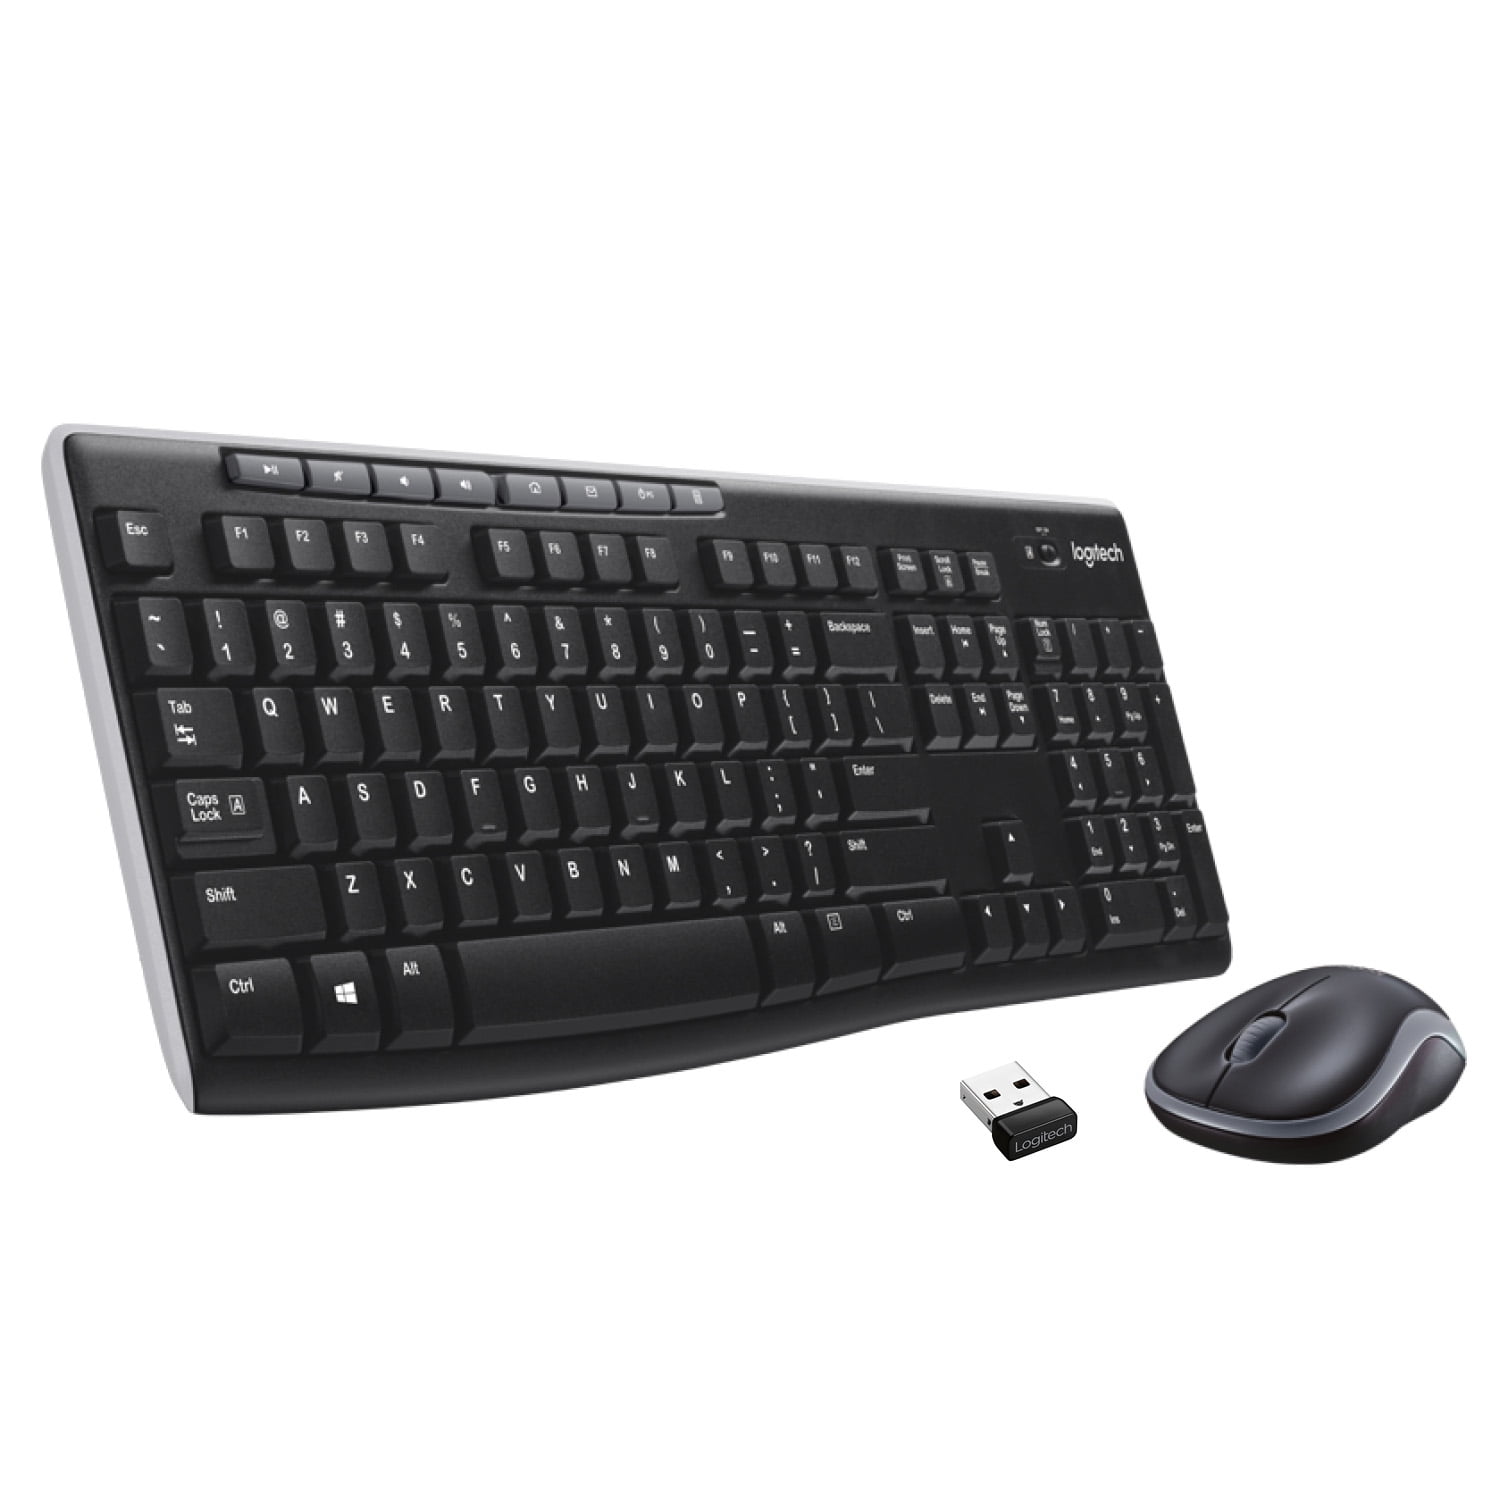 2.4GHz Wireless Keyboard and Mouse Kit for MINI PC Desktop Laptop WT UK 